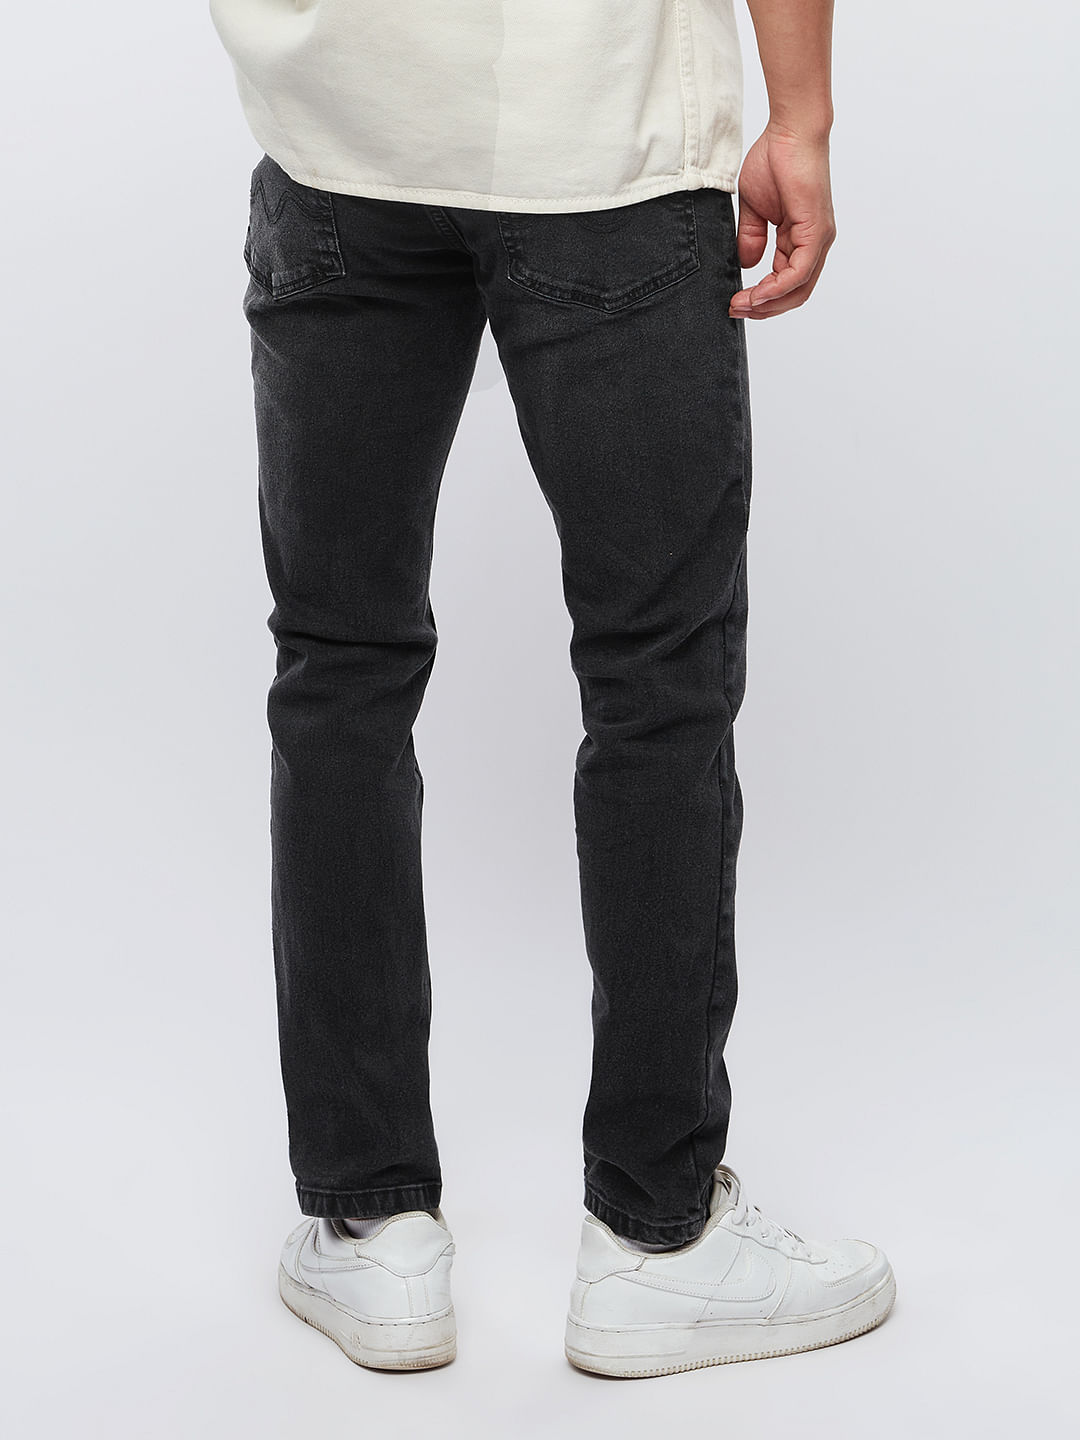 Buy Solids: Ash Grey (Slim Fit) Men Jeans Online